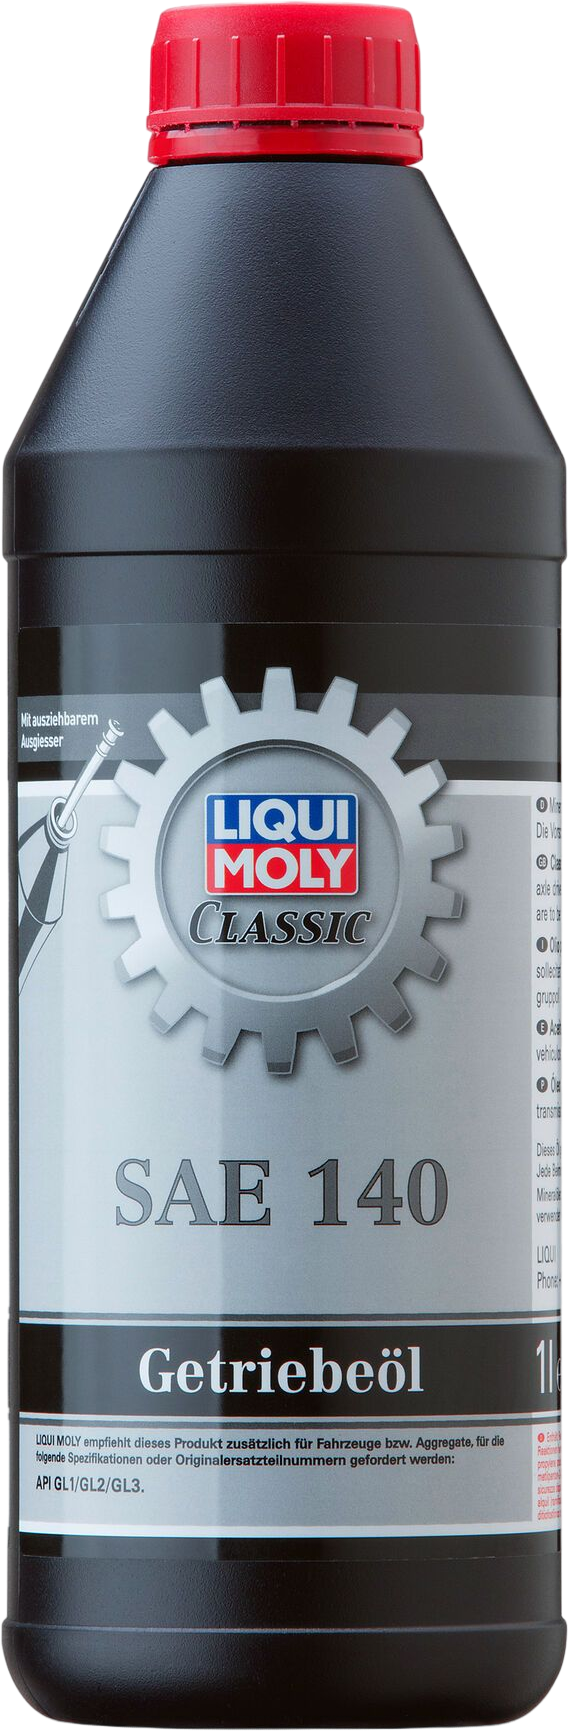 Liqui Moly Classic Transmissieolie SAE 140, 6 x 1 lt detail 2